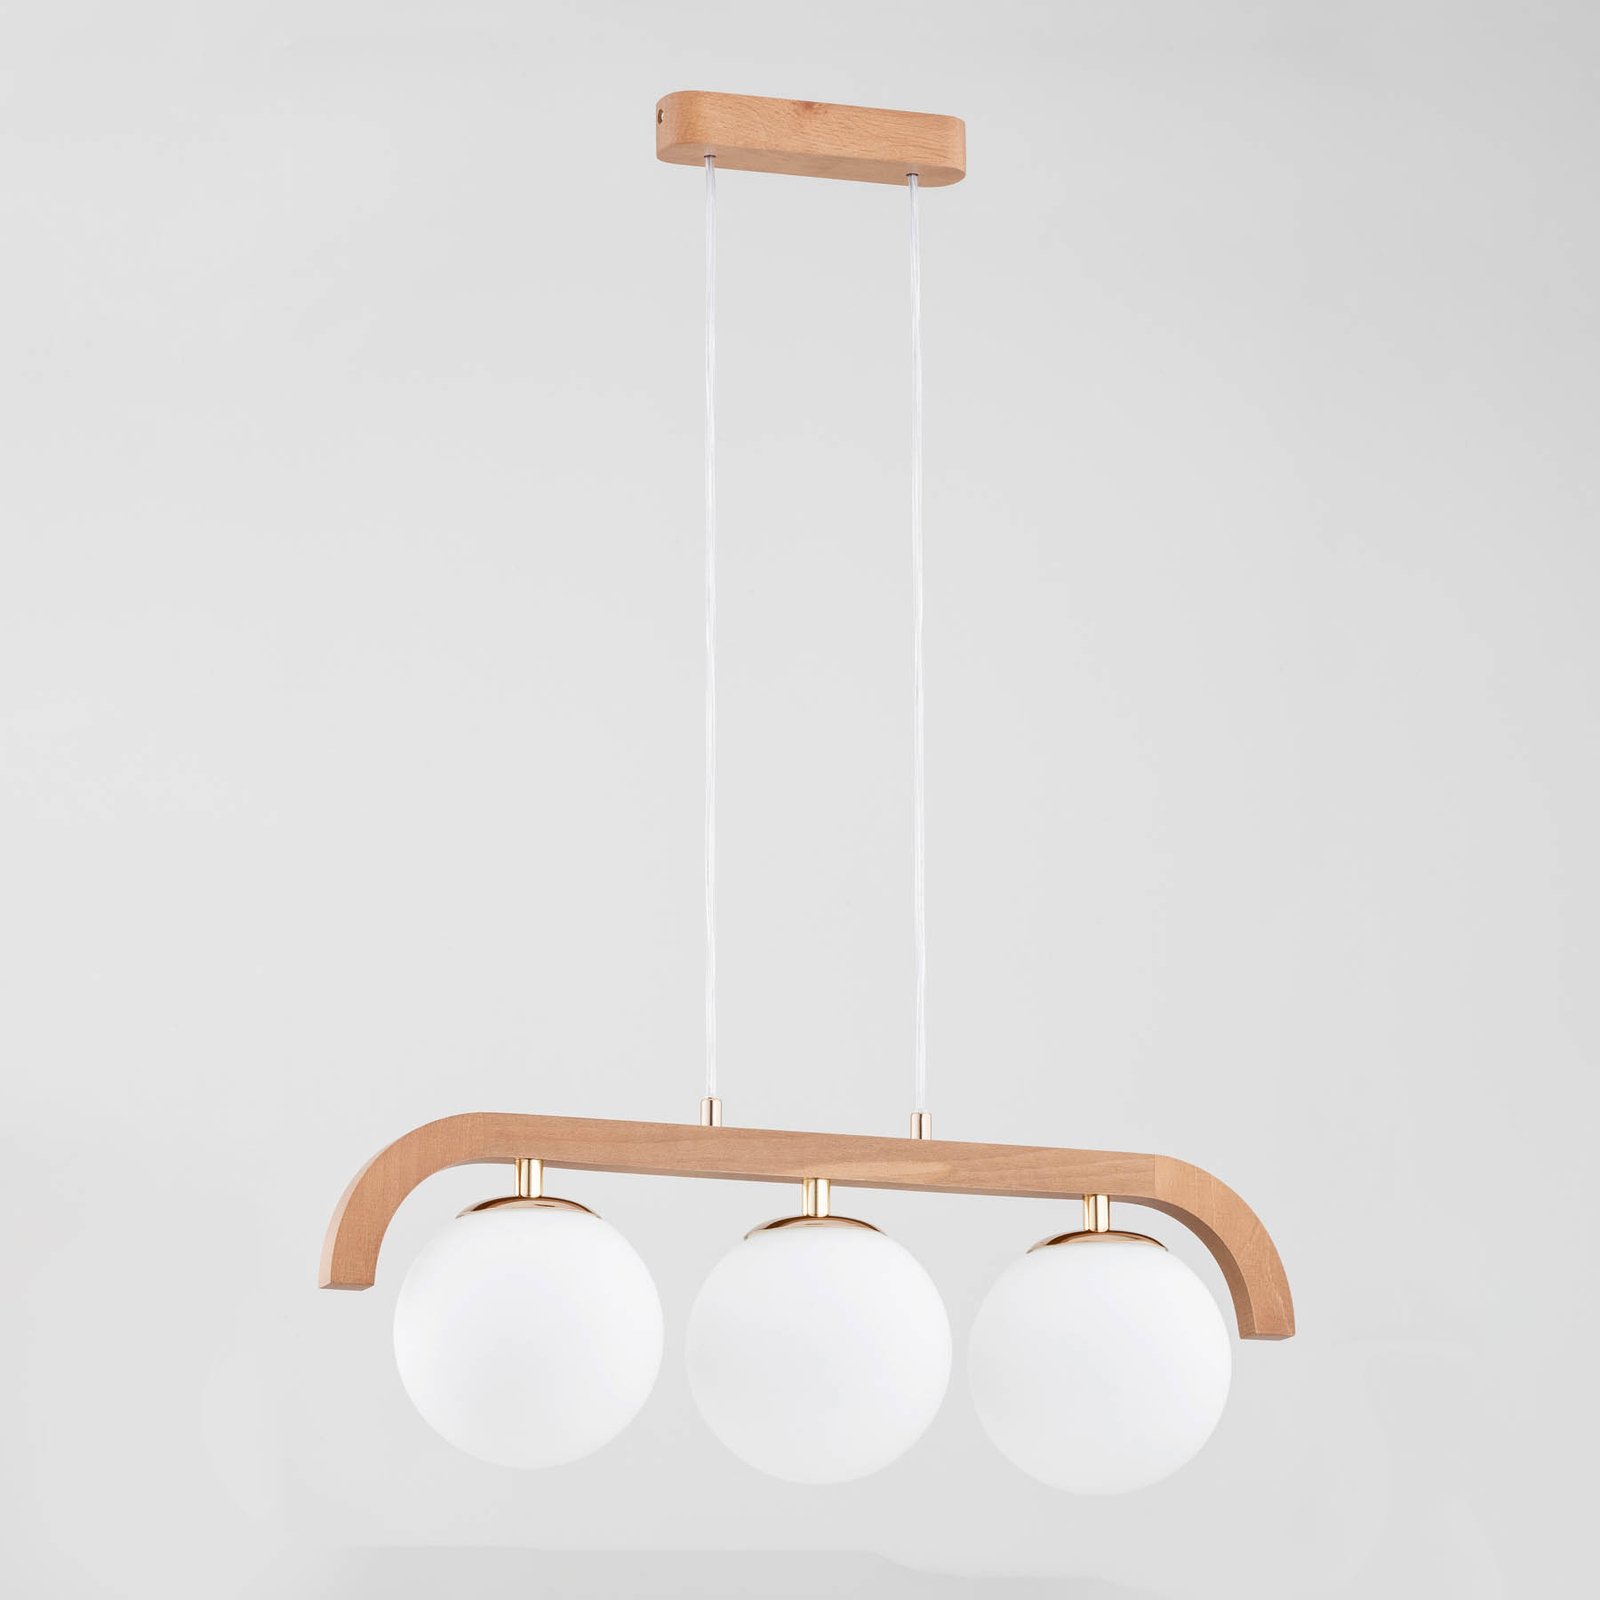 Kryza hanging light made of wood, three-bulb